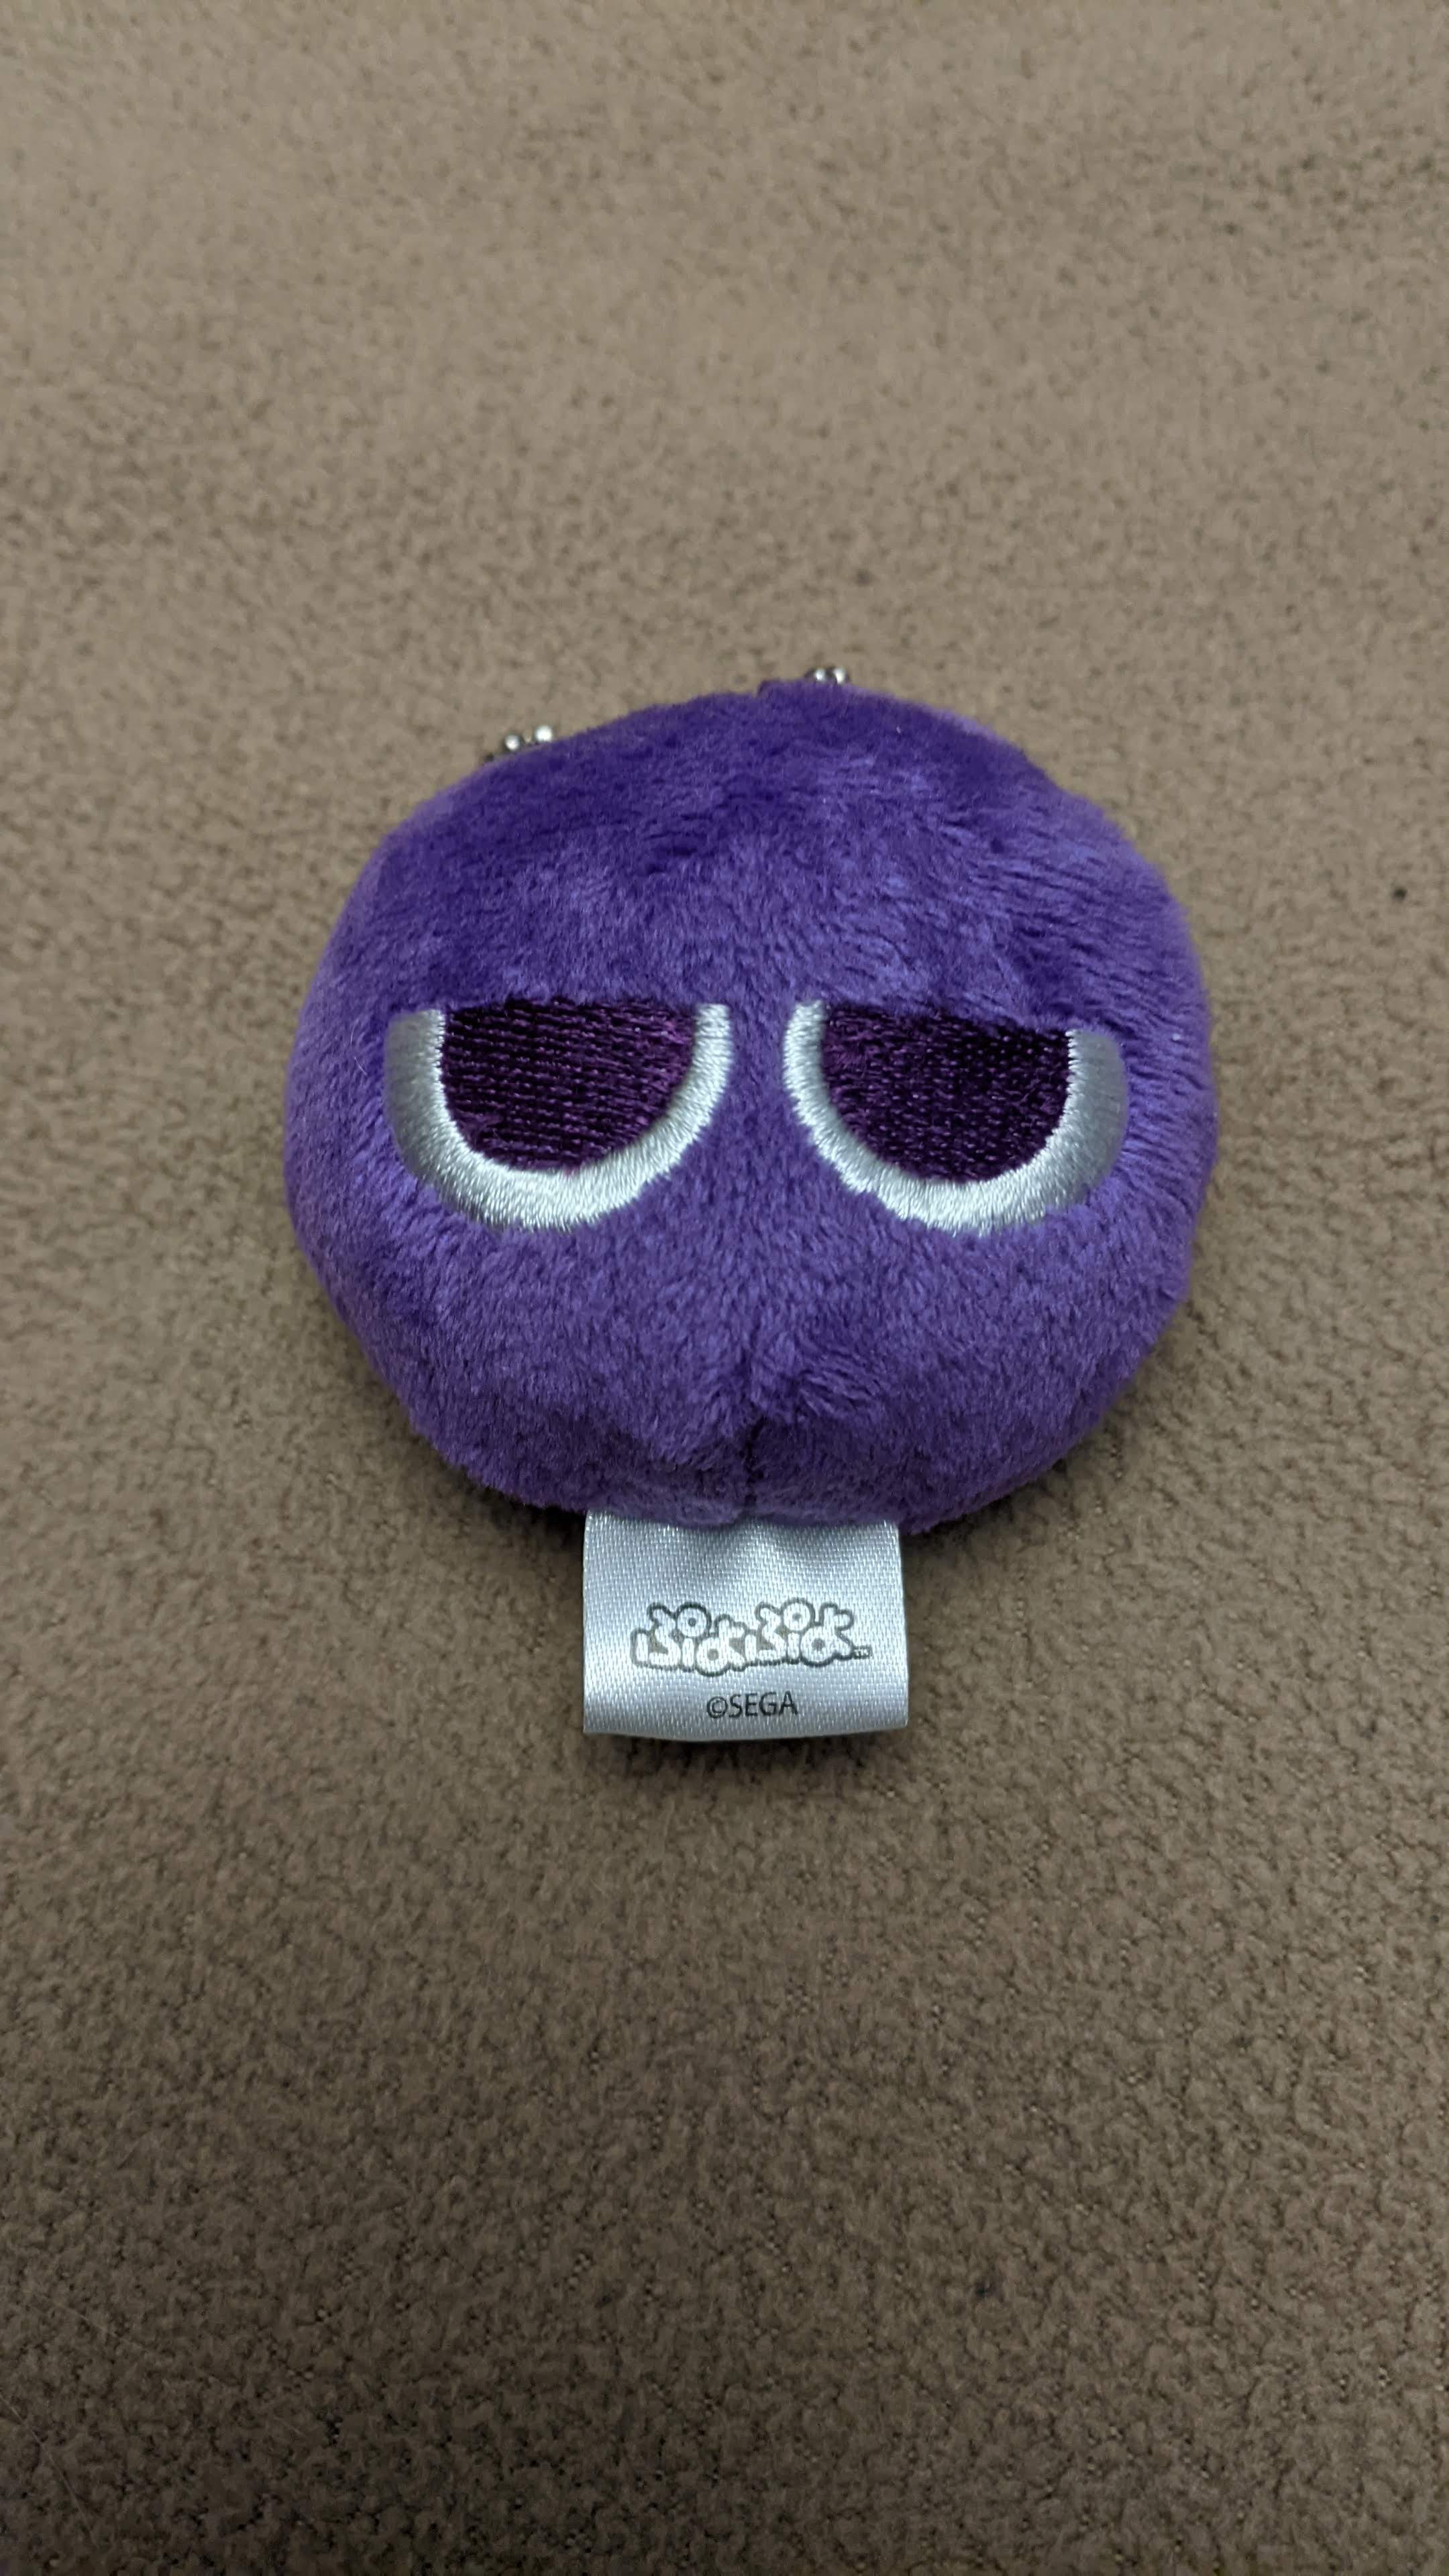 a purple puyo game character